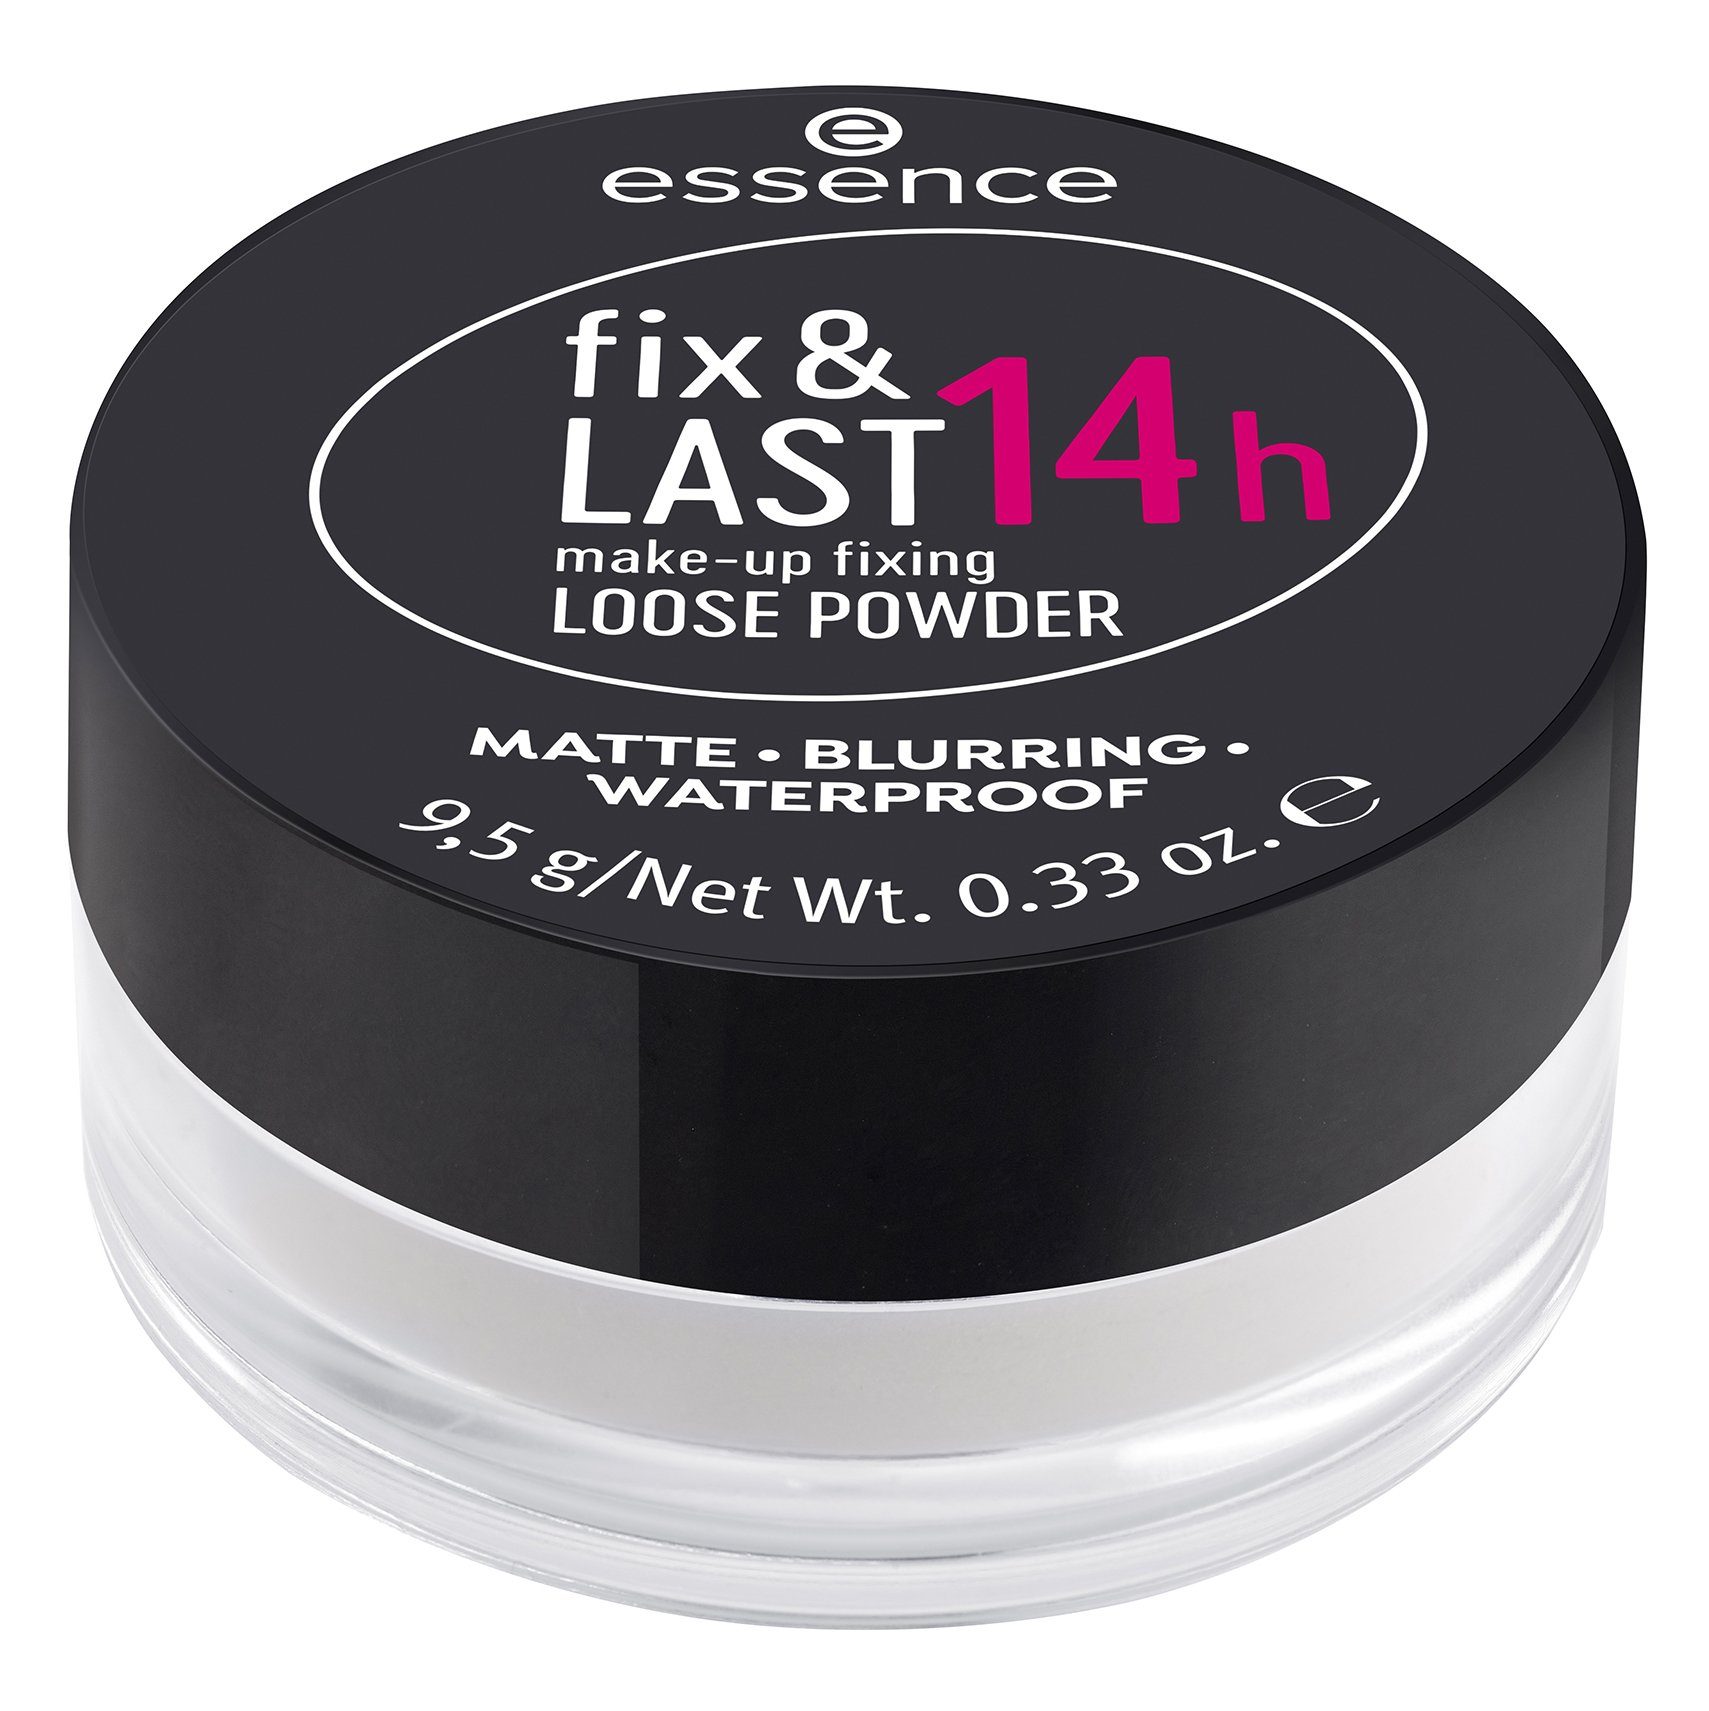 LOOSE & Essence Puder POWDER, fix fixing make-up 3-tlg. LAST 14h